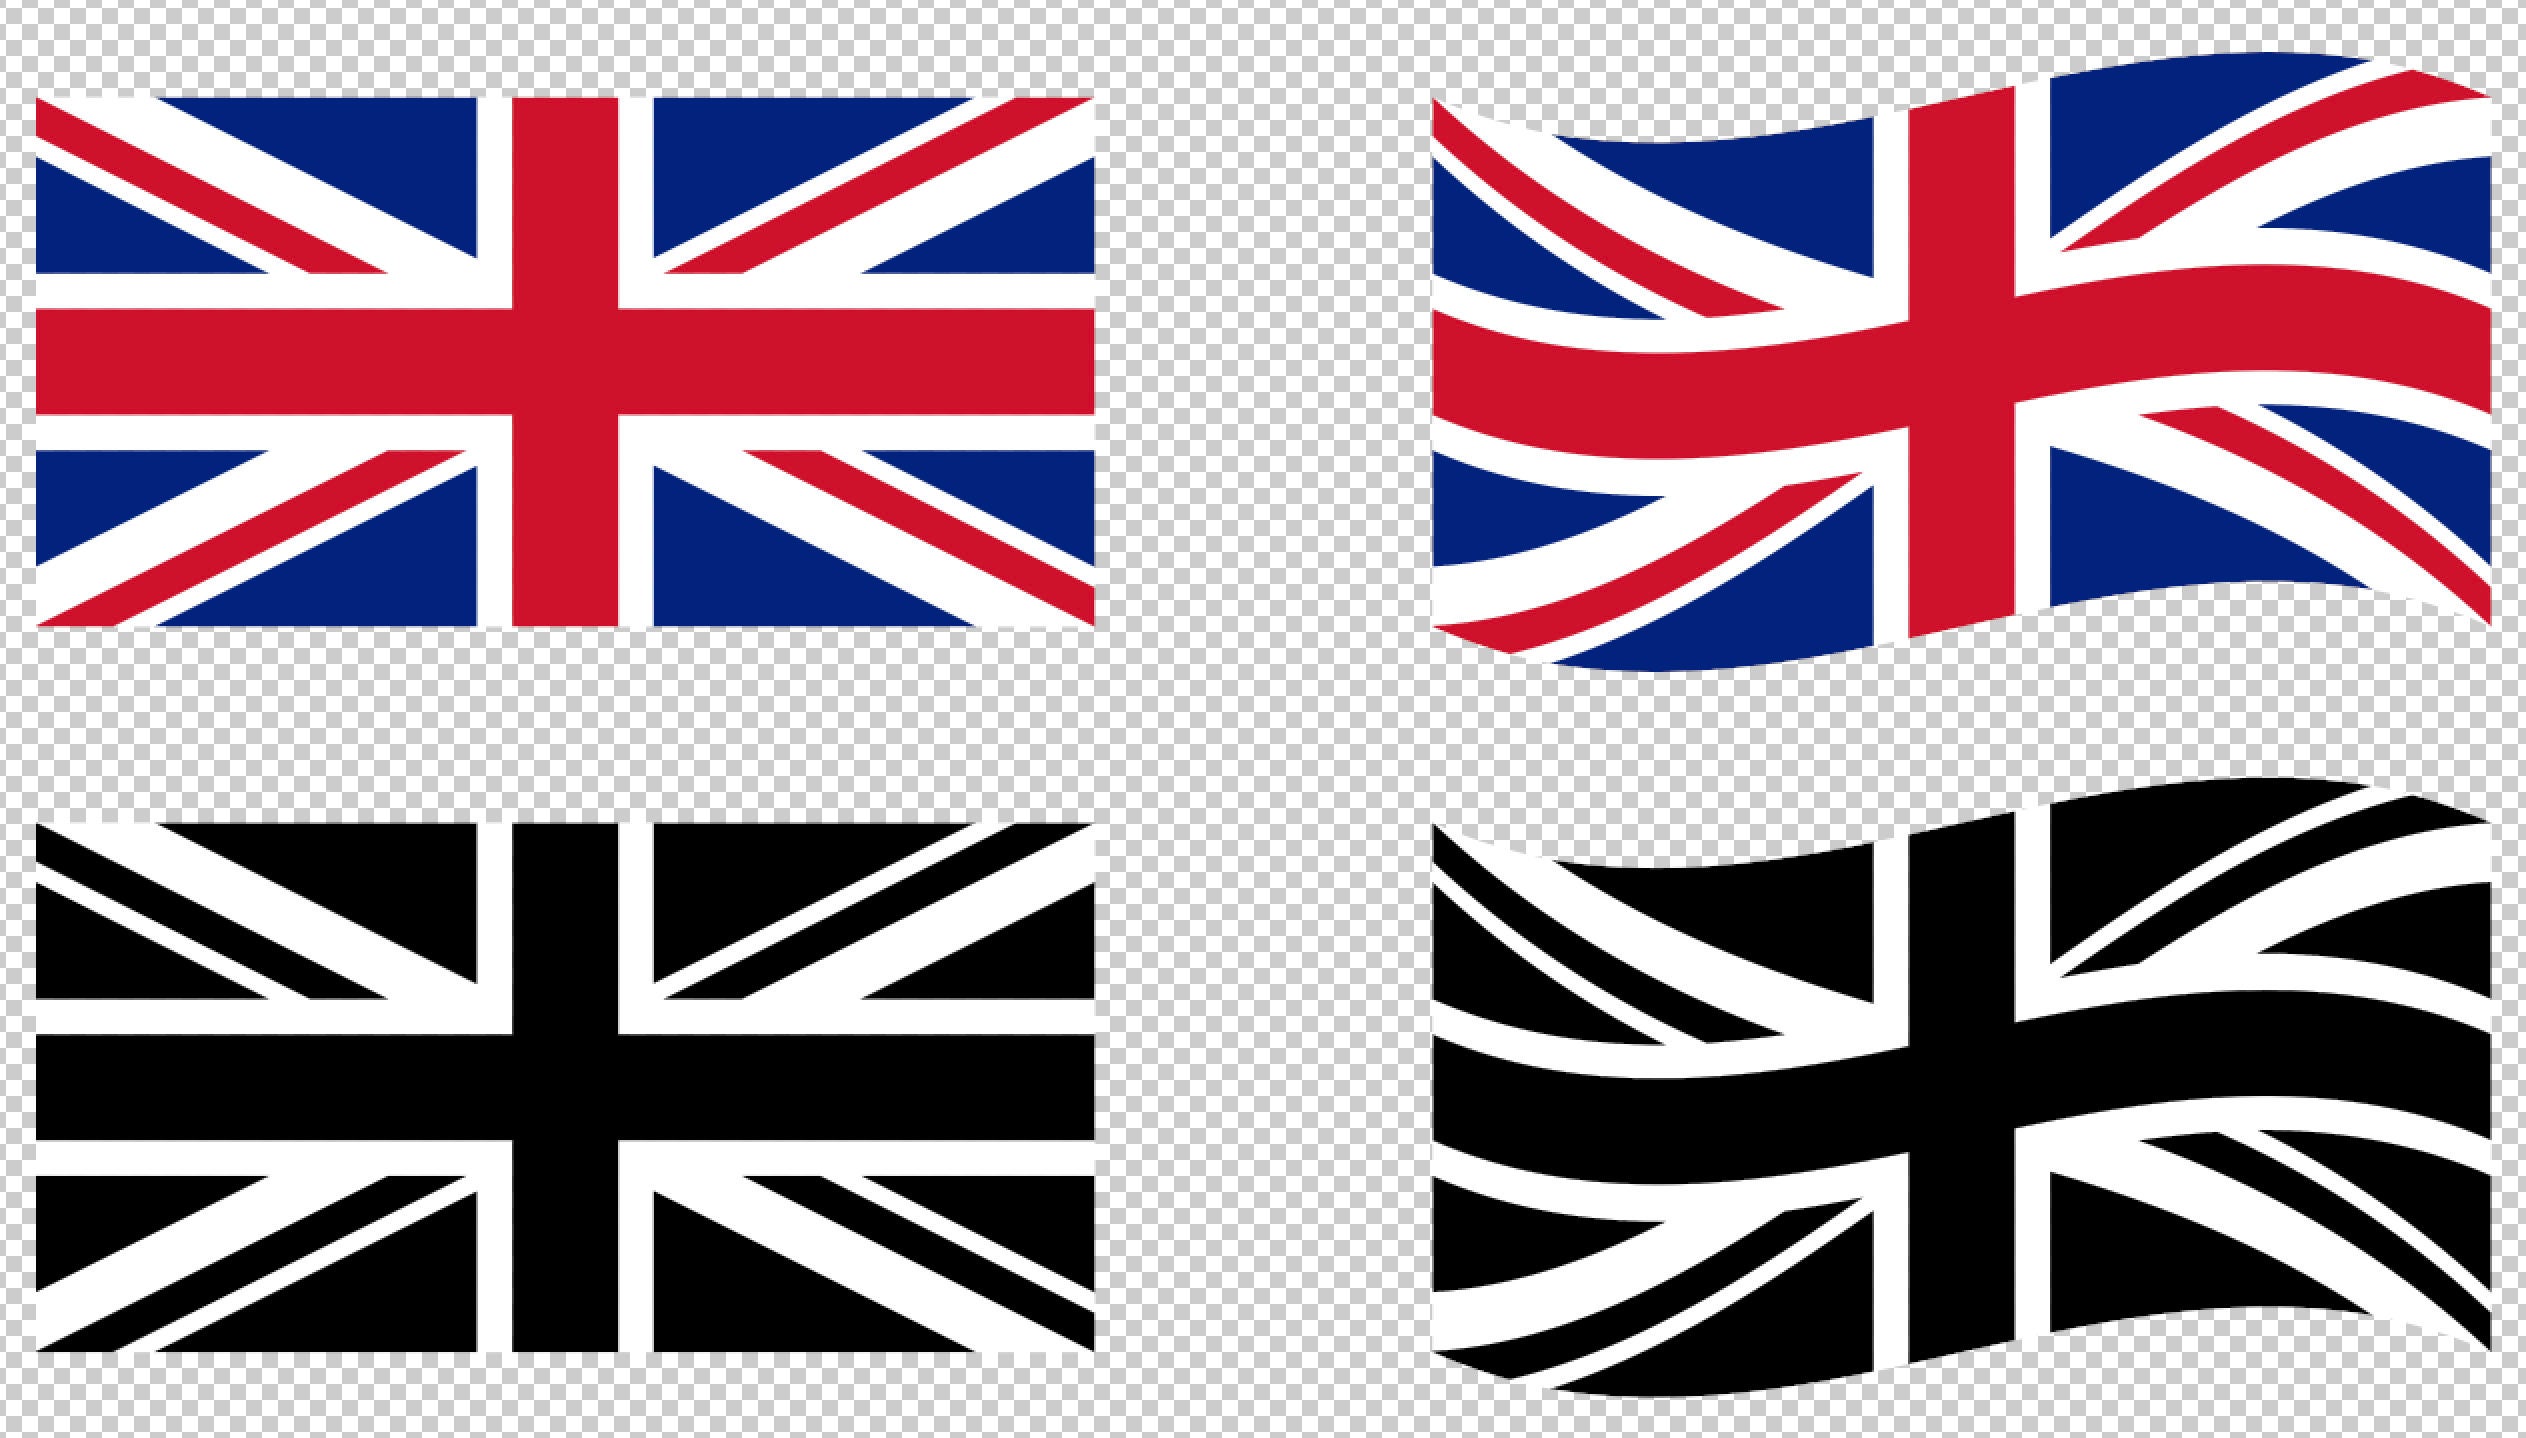 United Kingdom Flag SVG Vector Clip Art - Cutting Files ...